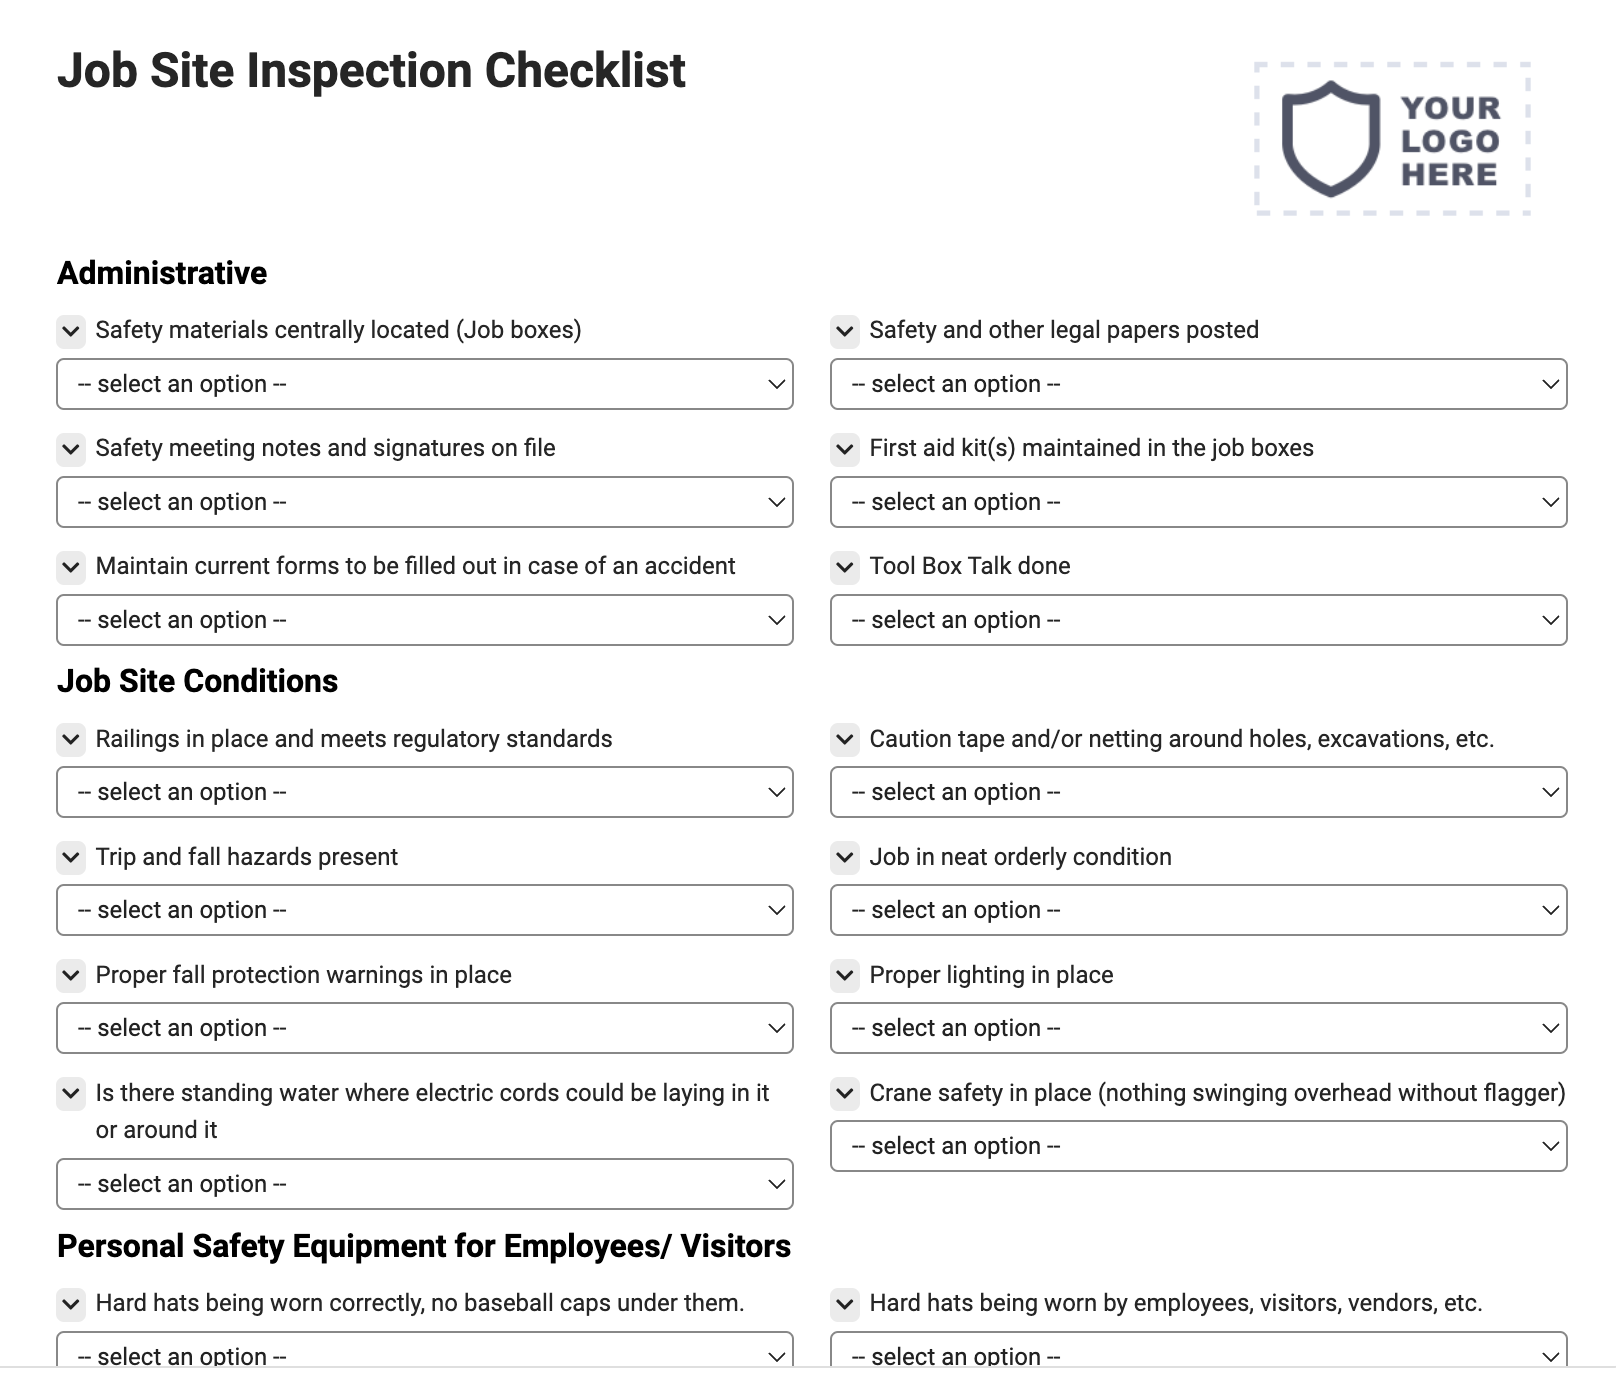 Job Site Inspection Checklist